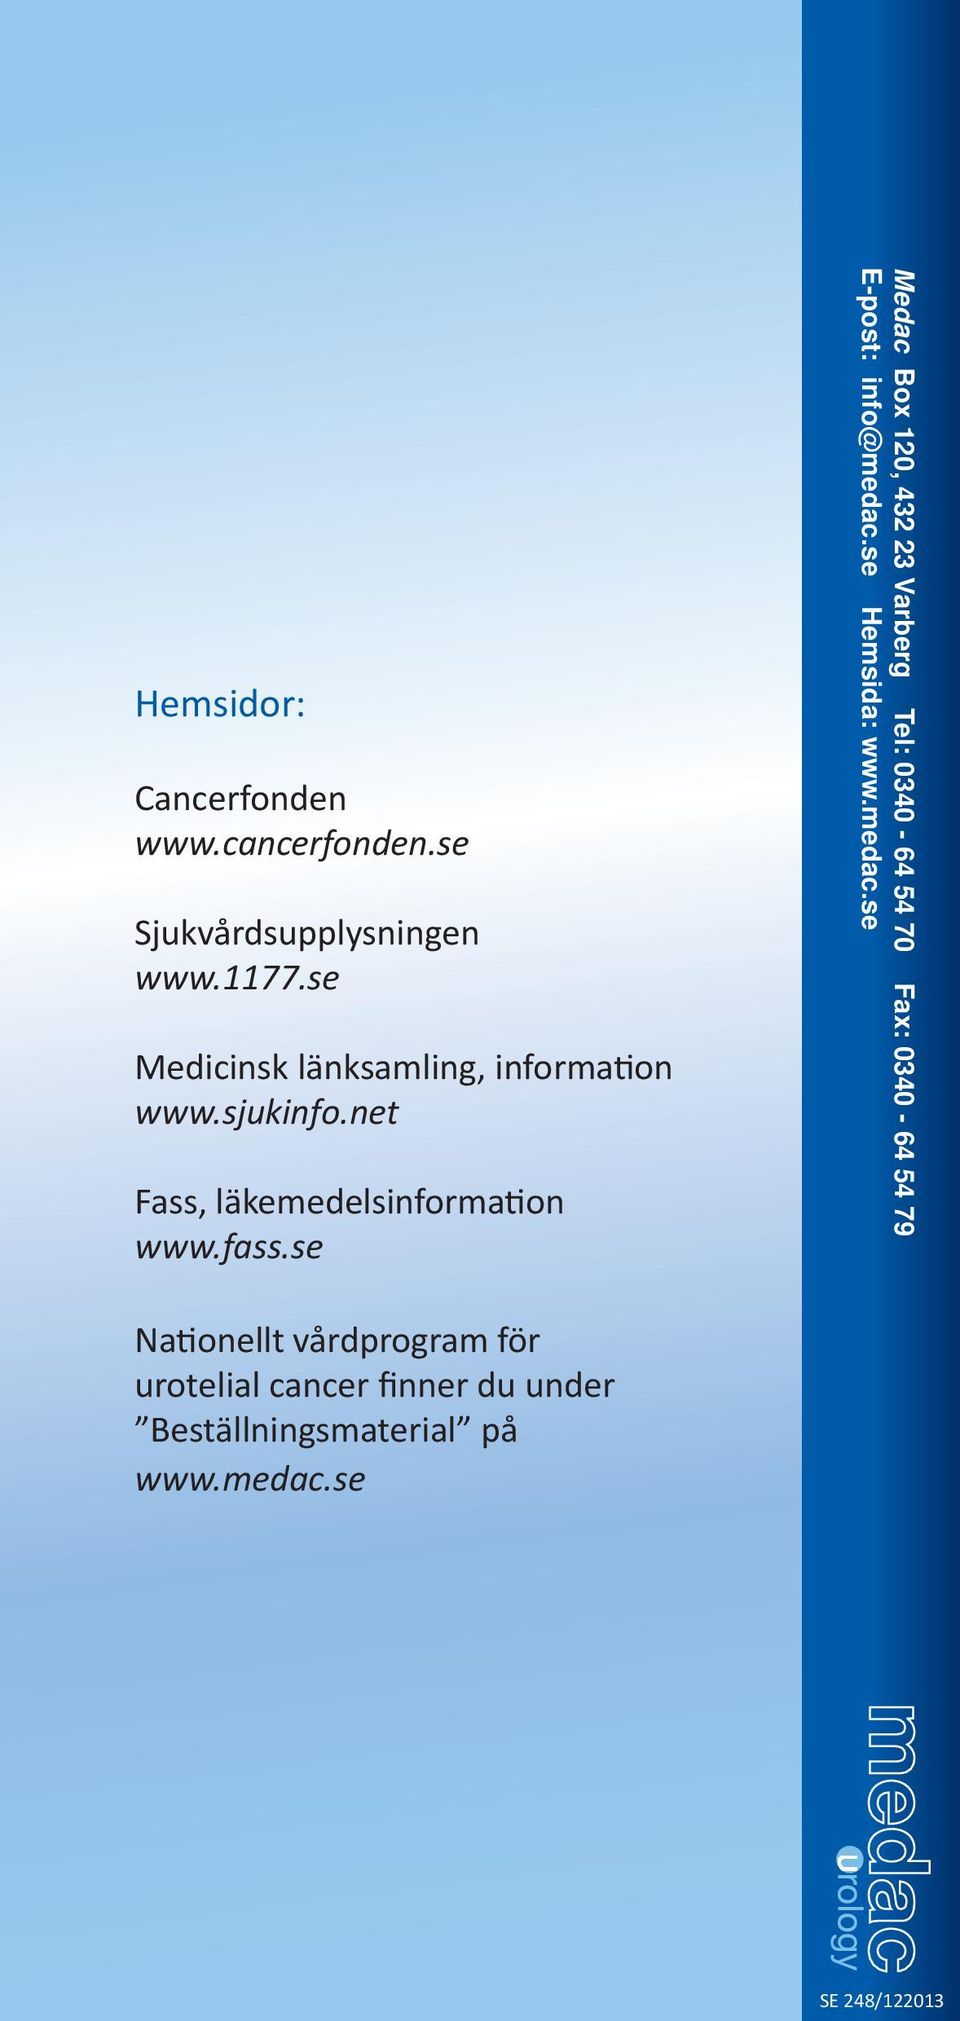 se Medac Box 120, 432 23 Varberg Tel: 0340-64 54 70 Fax: 0340-64 54 79 E-post: info@medac.